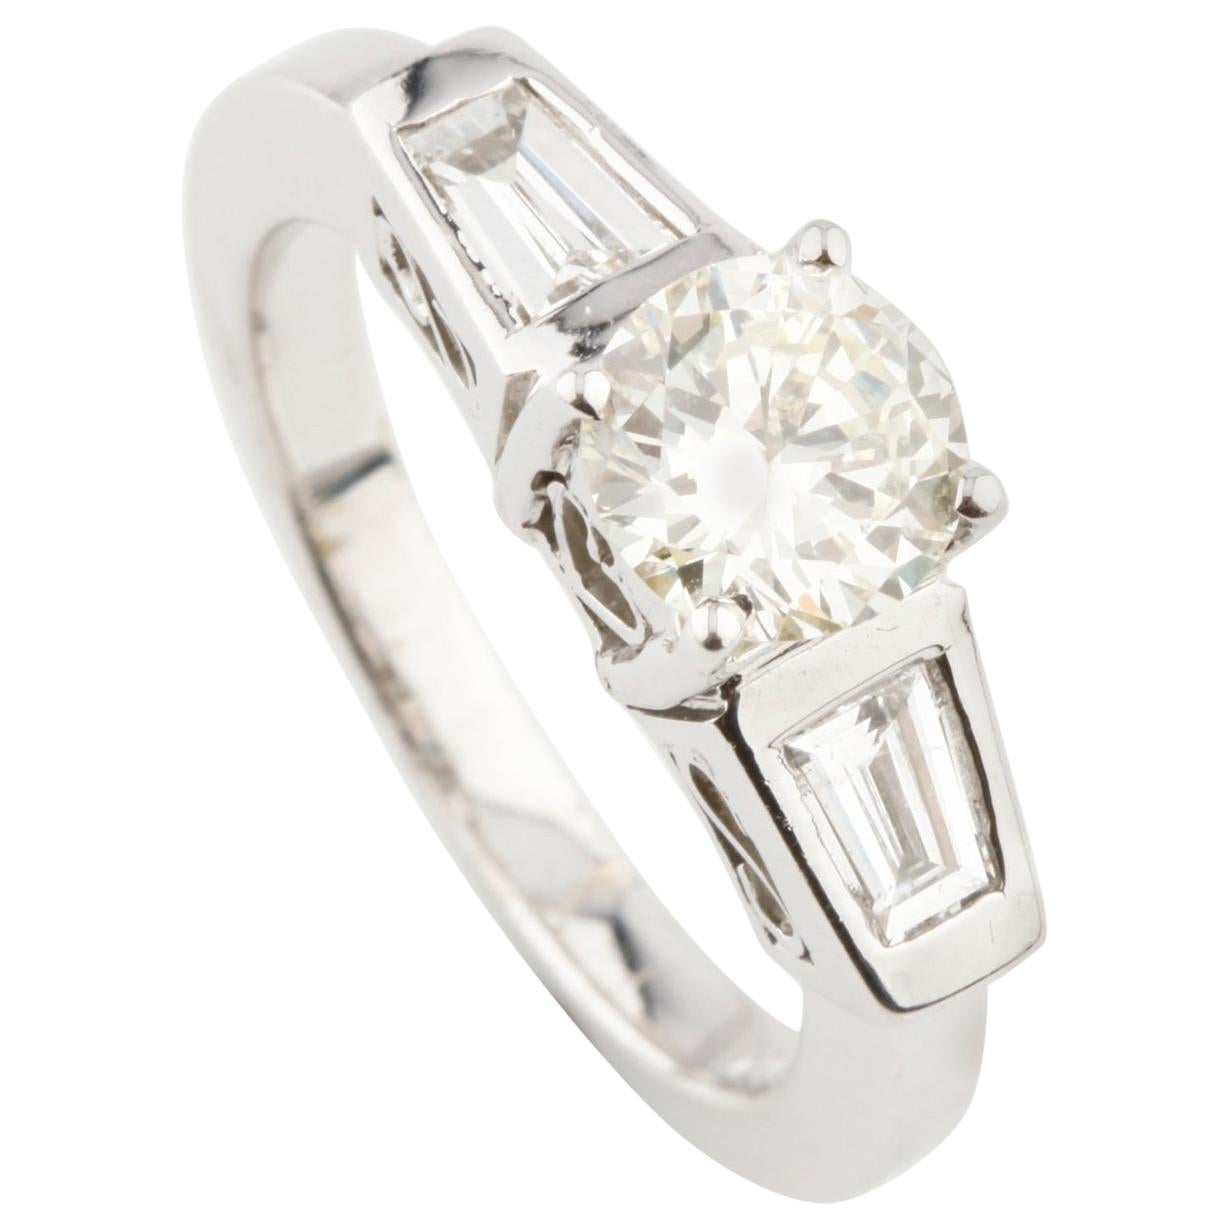 1.41 Carat Light Fancy Yellow Diamond 14 Karat White Gold Engagement Ring For Sale